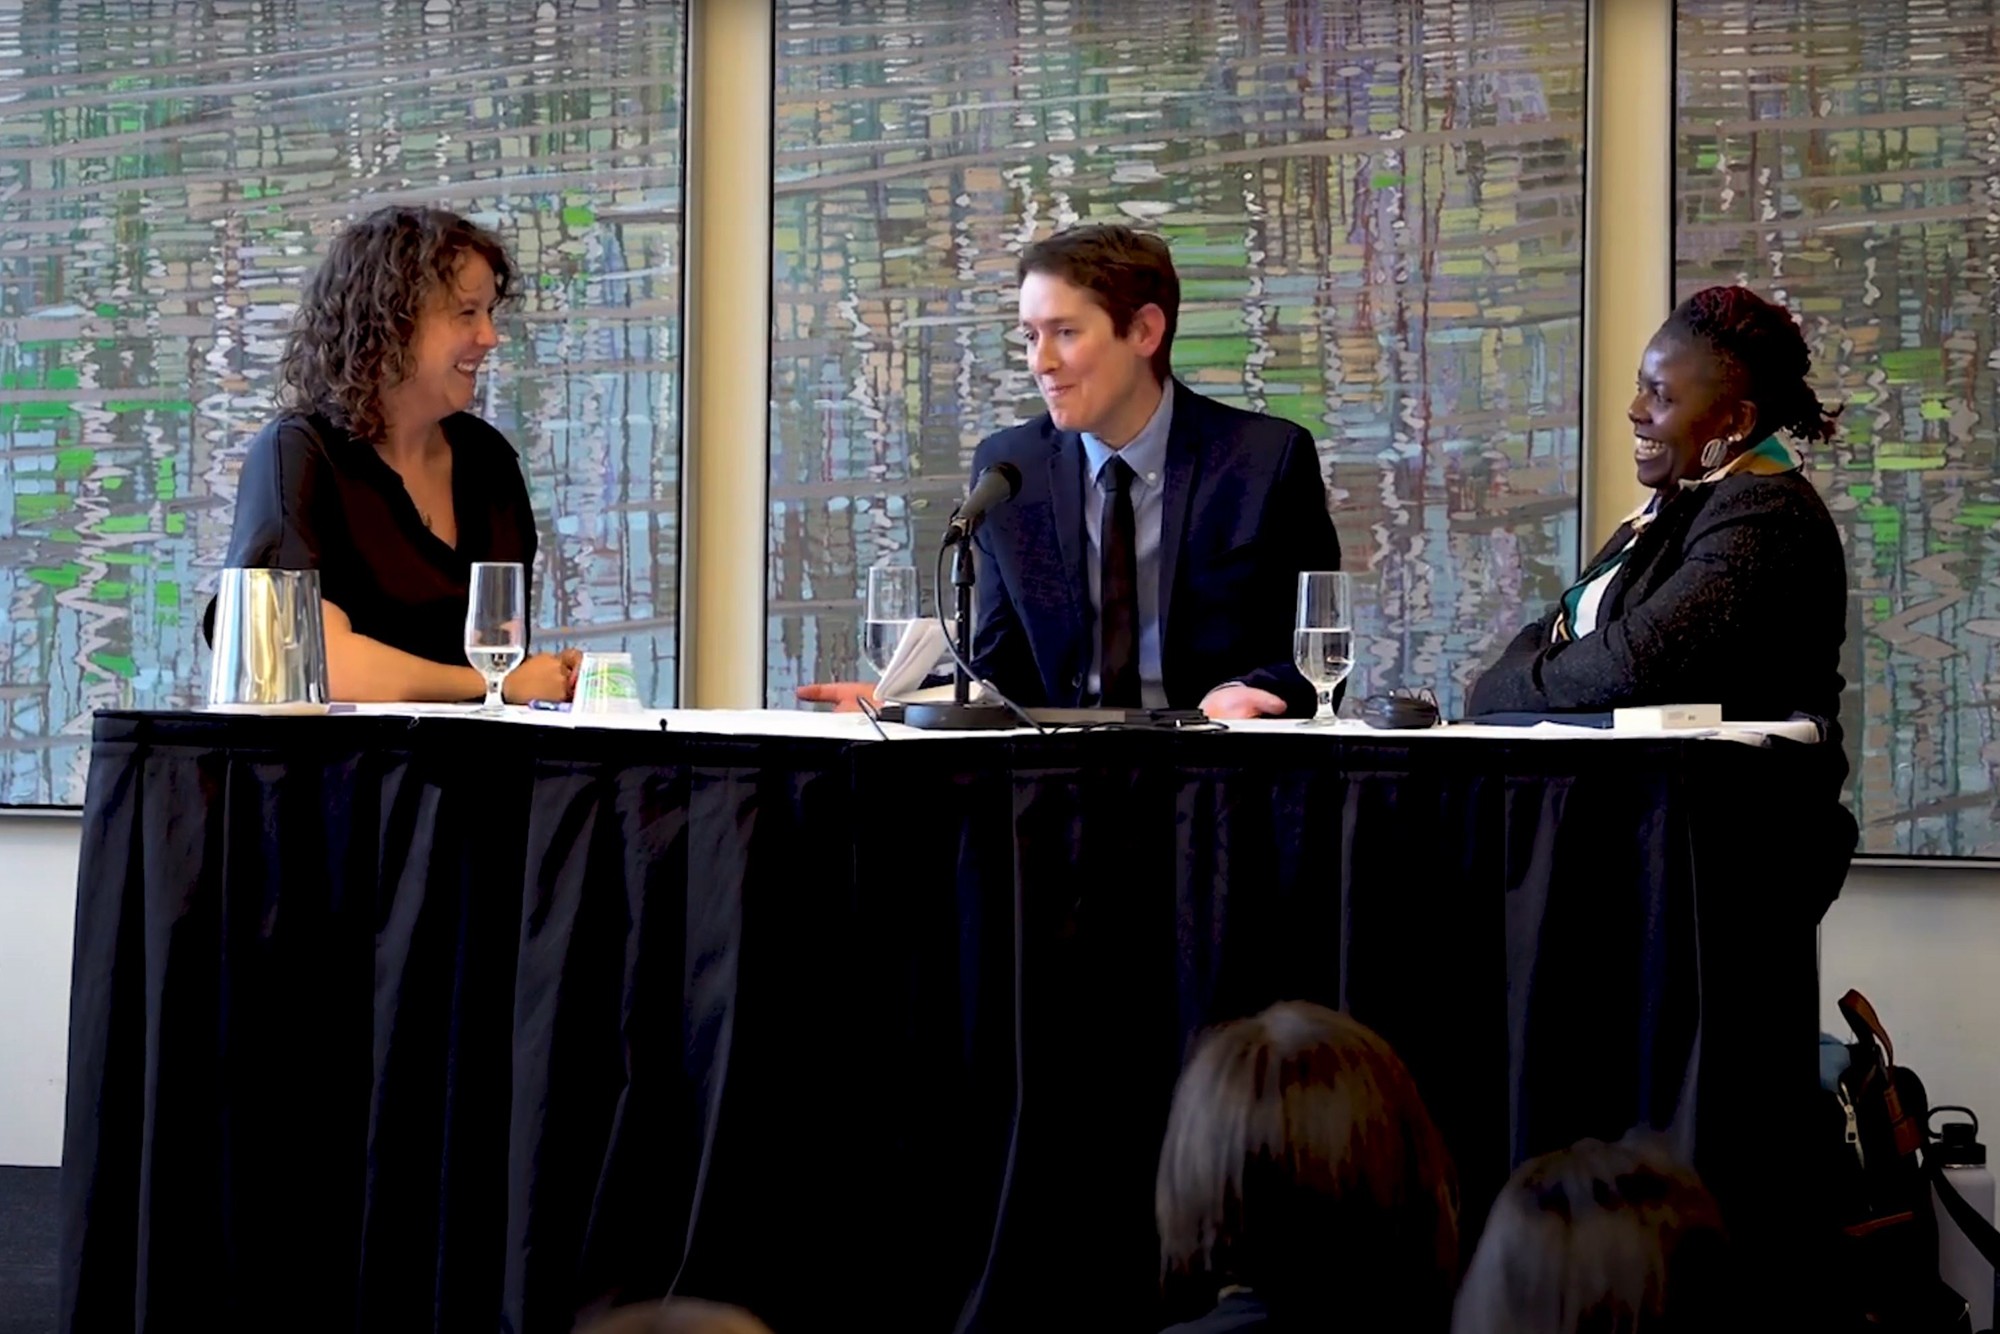 Careers in Social Justice Panel Discussion with Trish Garner, Panelist; Joy Walcott-Francis, Panelist; Yasmin Vejs Simsek, Moderator